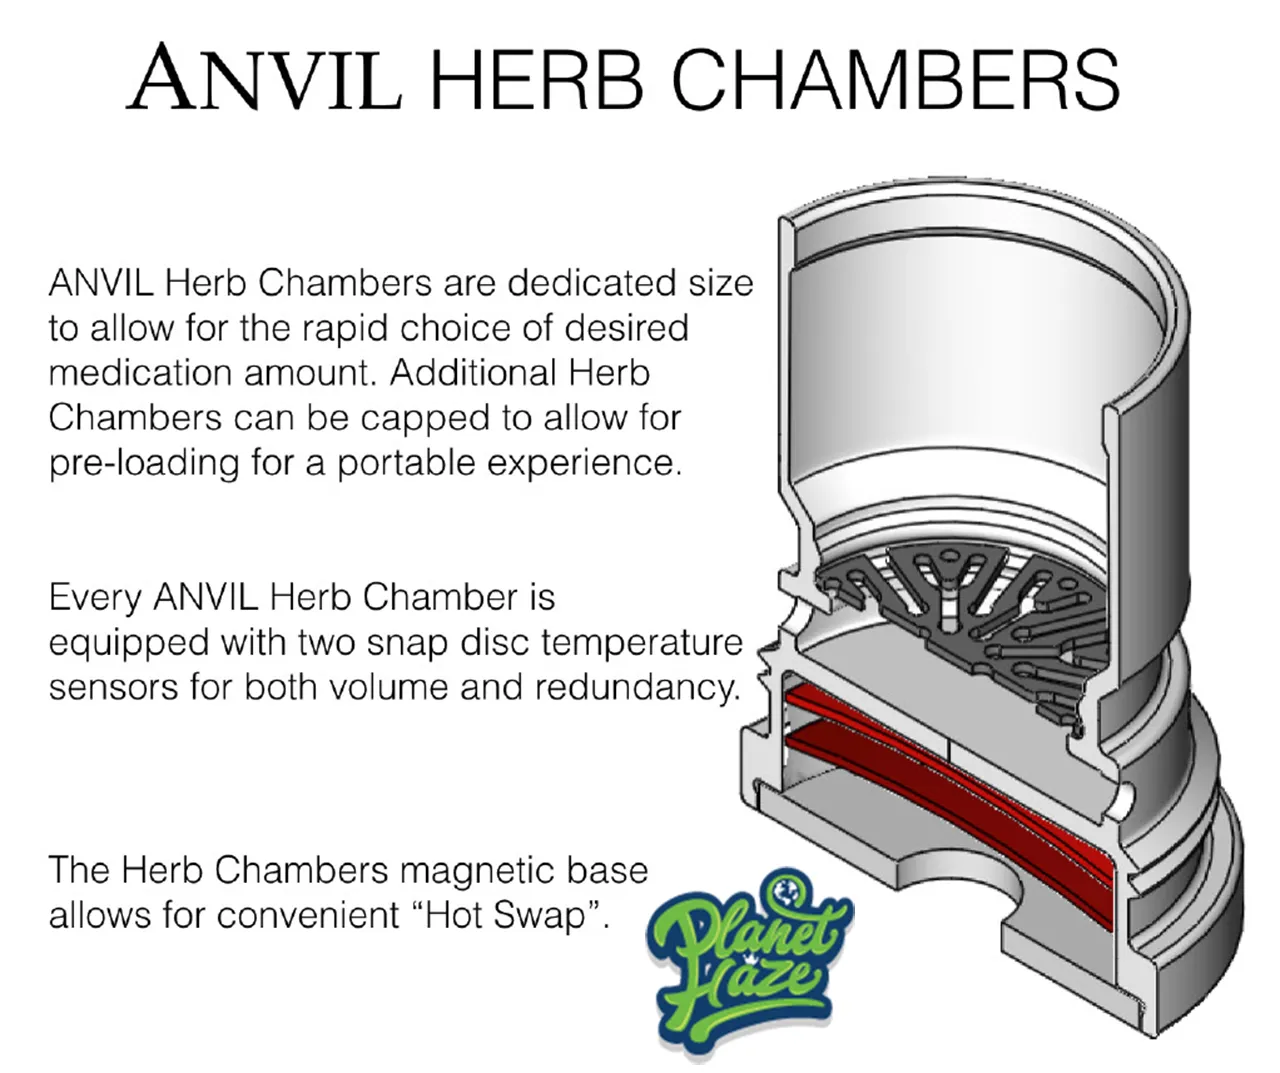 Anvil Herb Chamber